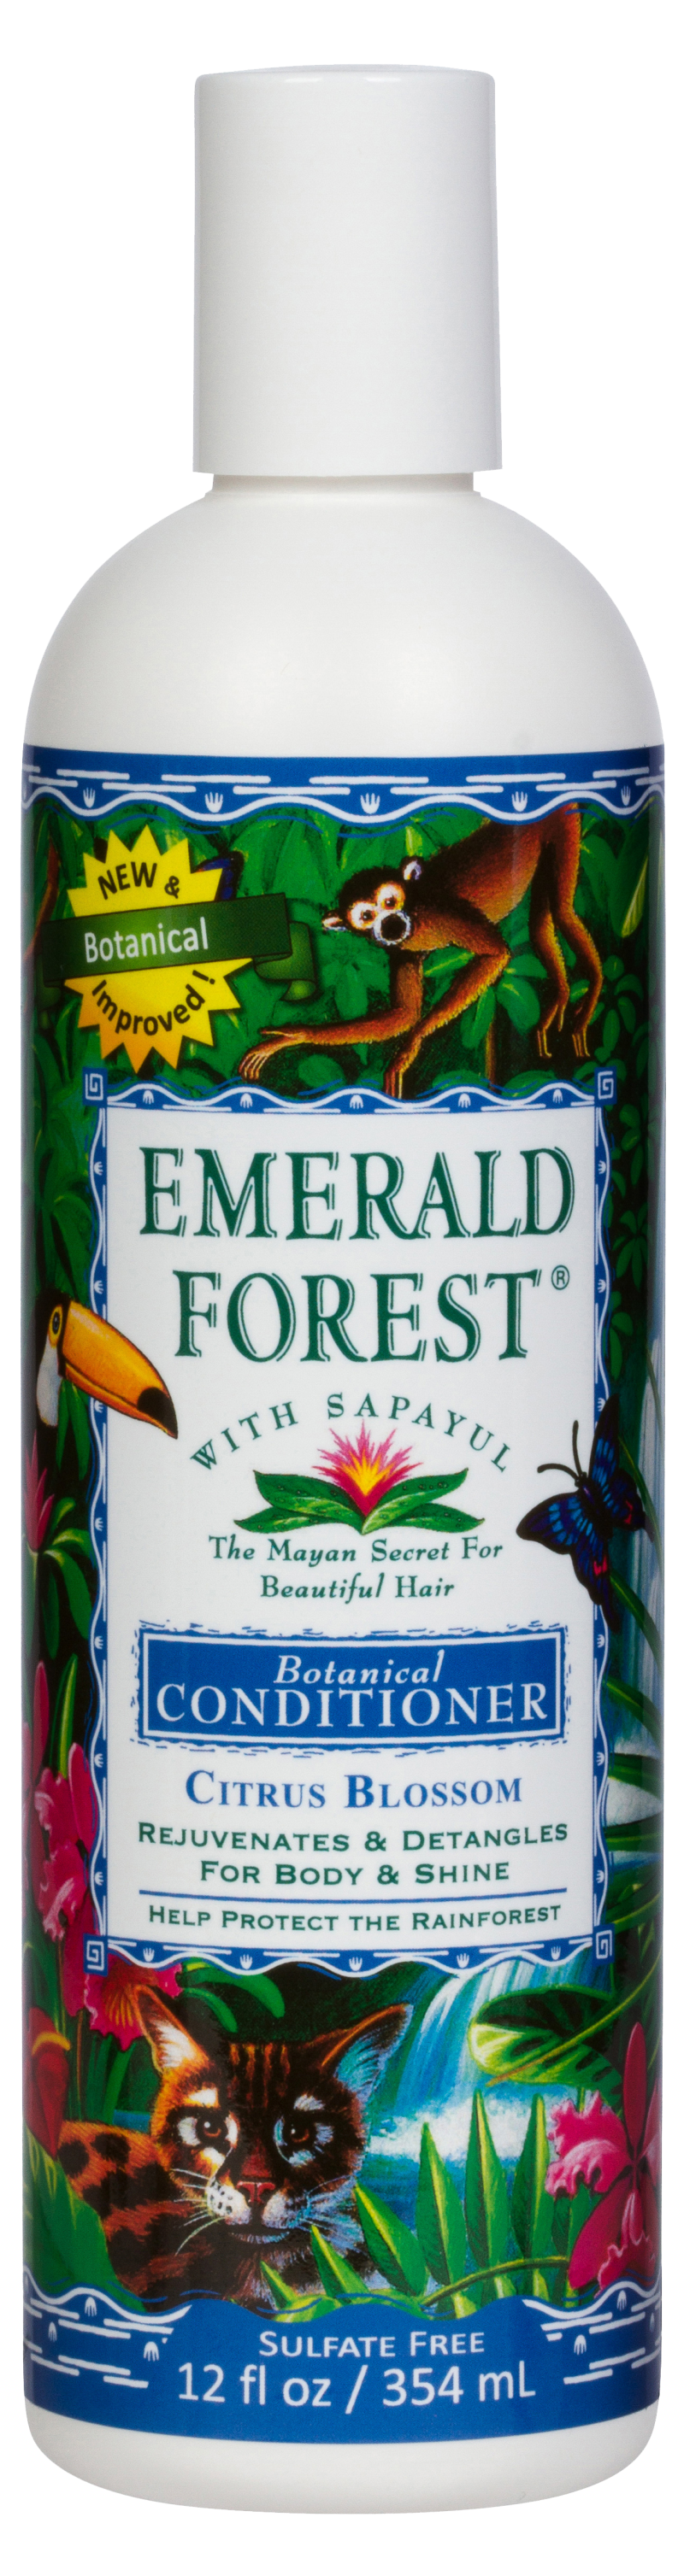 Emerald Forest Botanical Conditioner